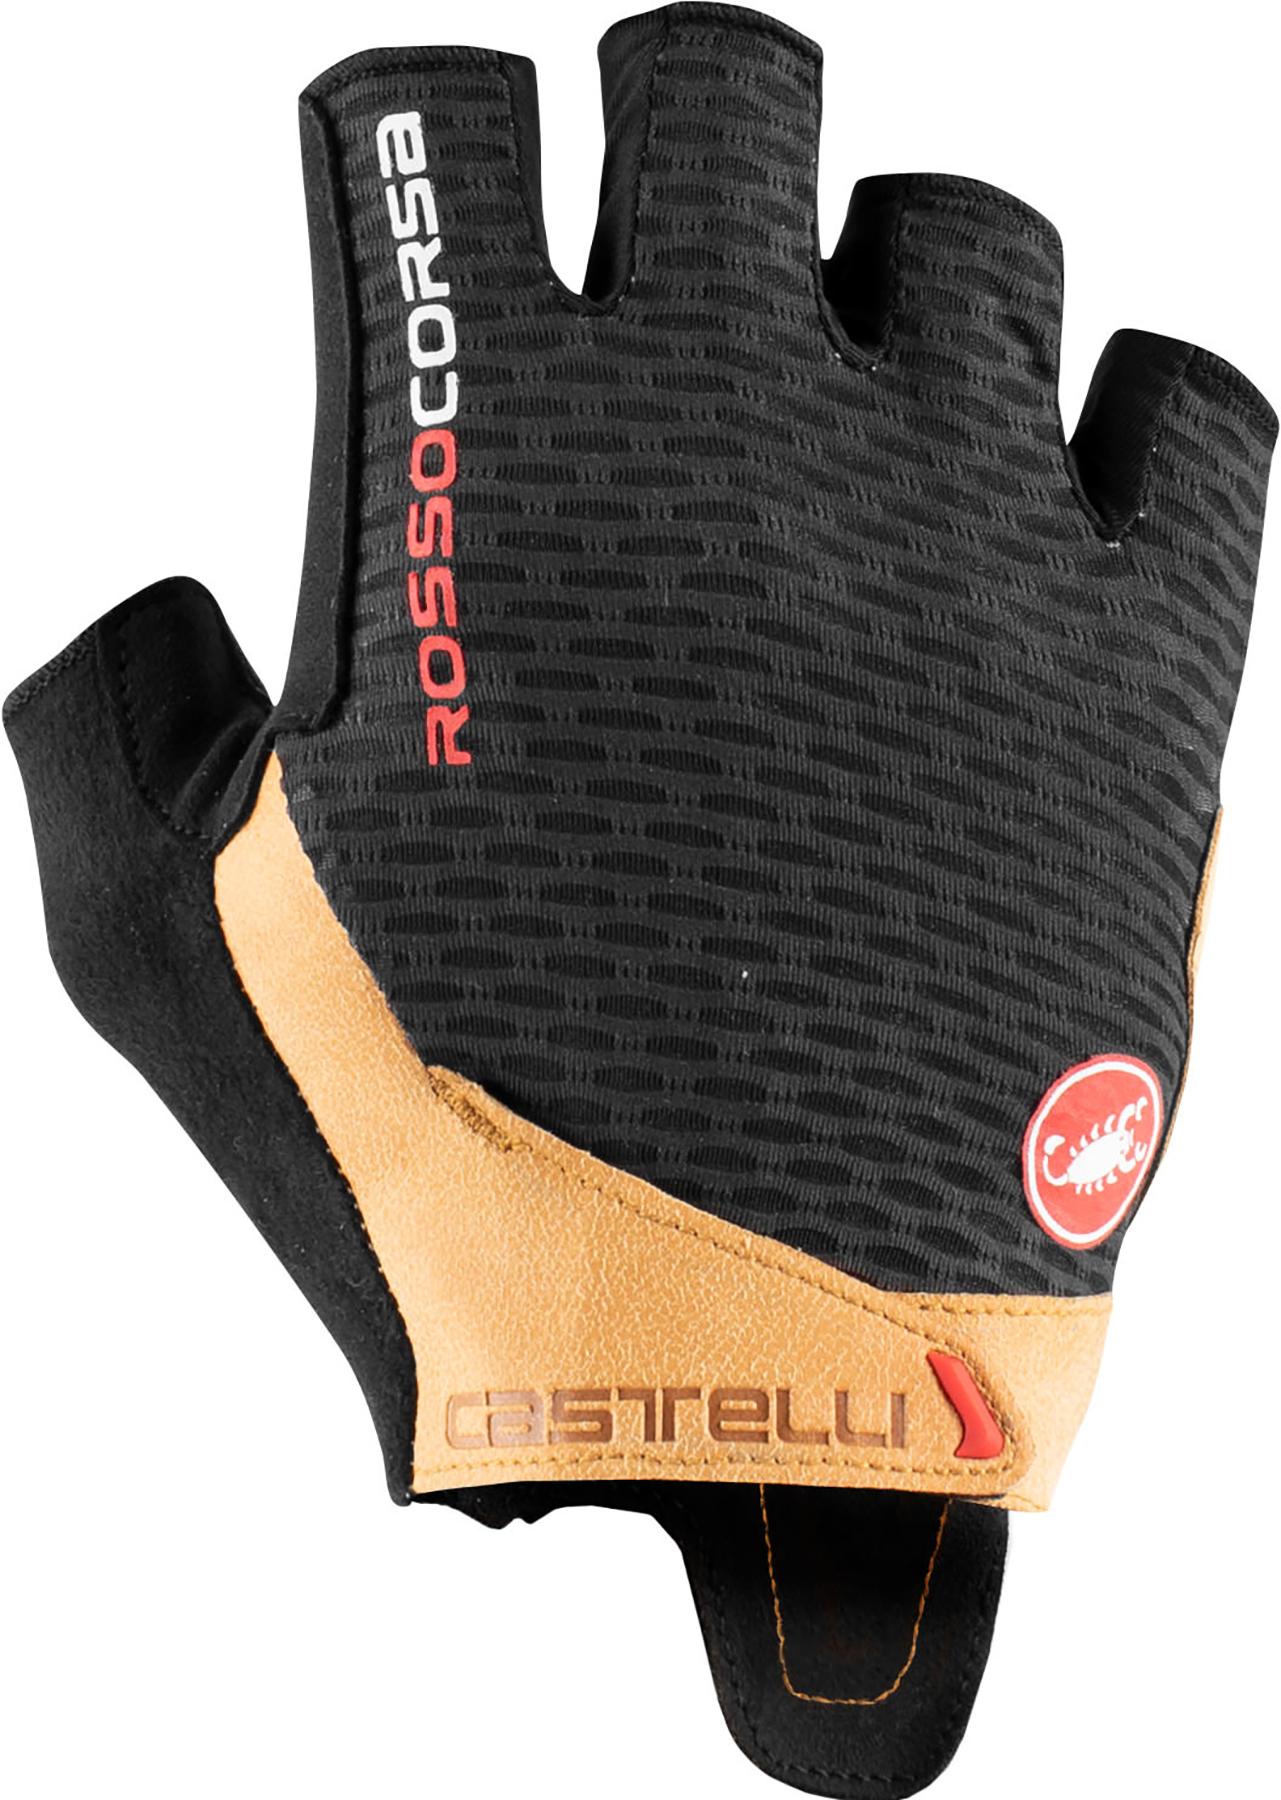 Castelli Rosso Corsa Pro V Gloves  Black/tan